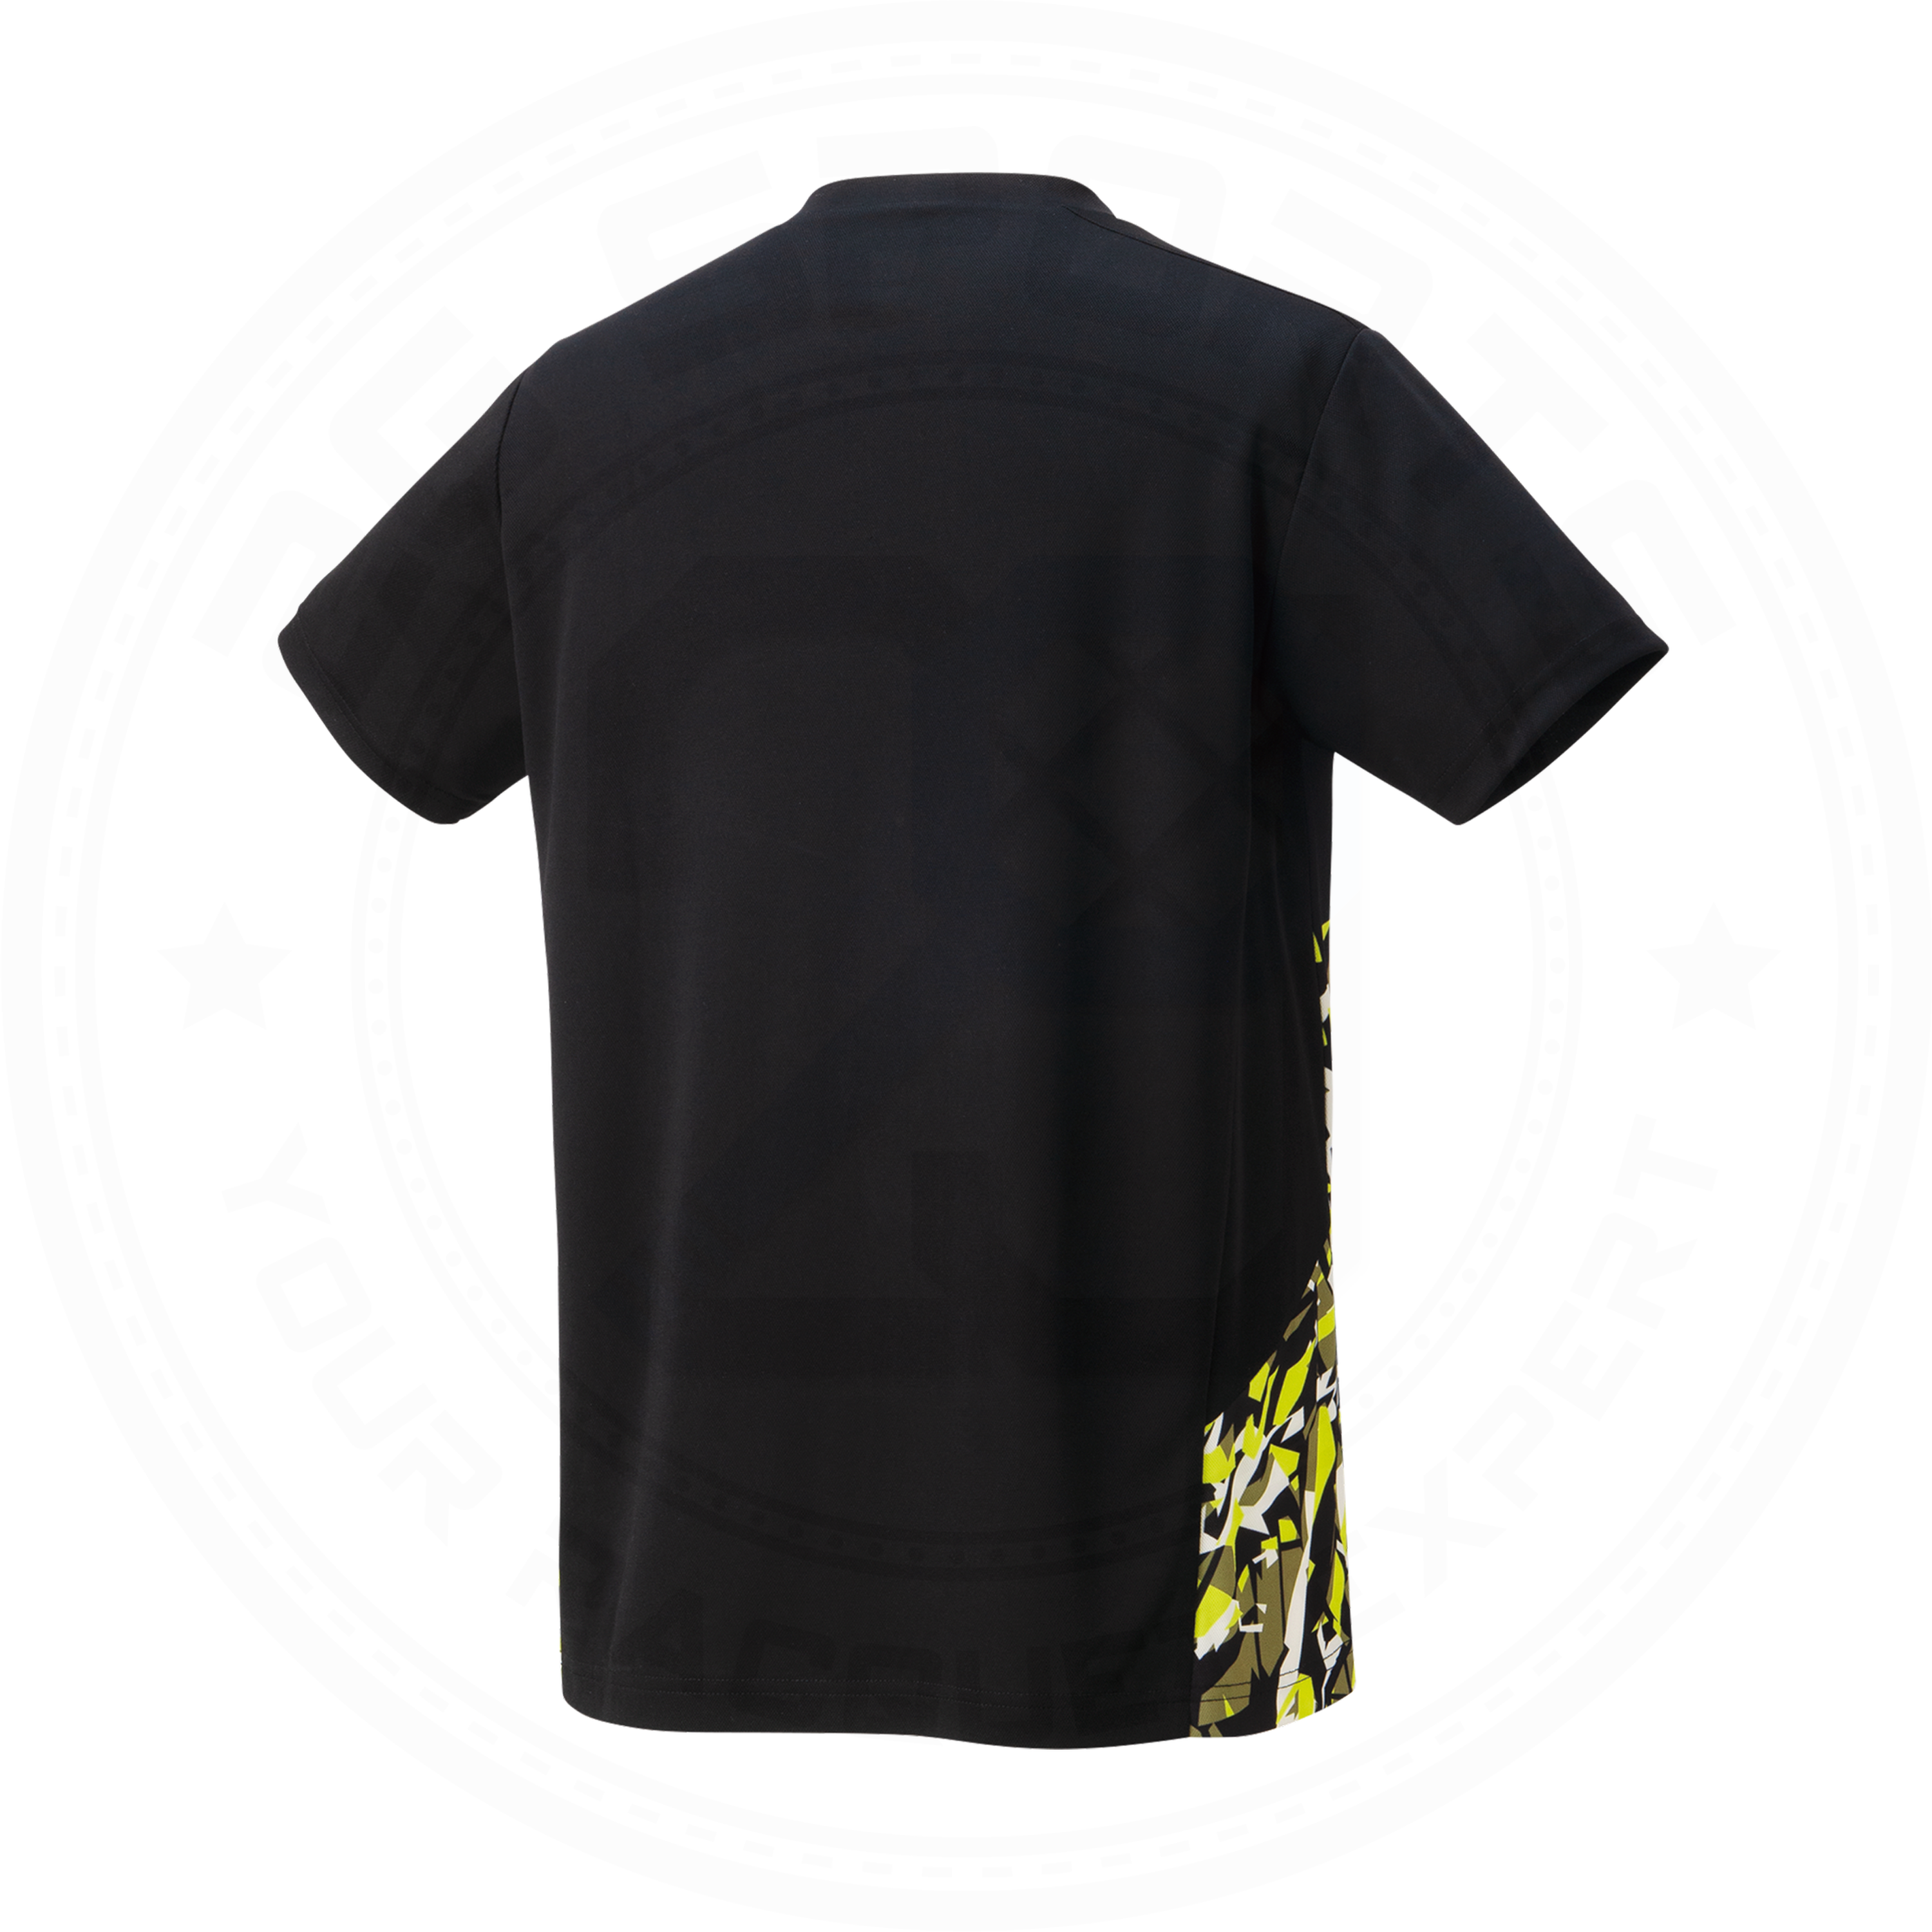 Yonex Japan National Badminton/ Sports Shirt 10551EX Black/ Yellow UNISEX (Clearance)